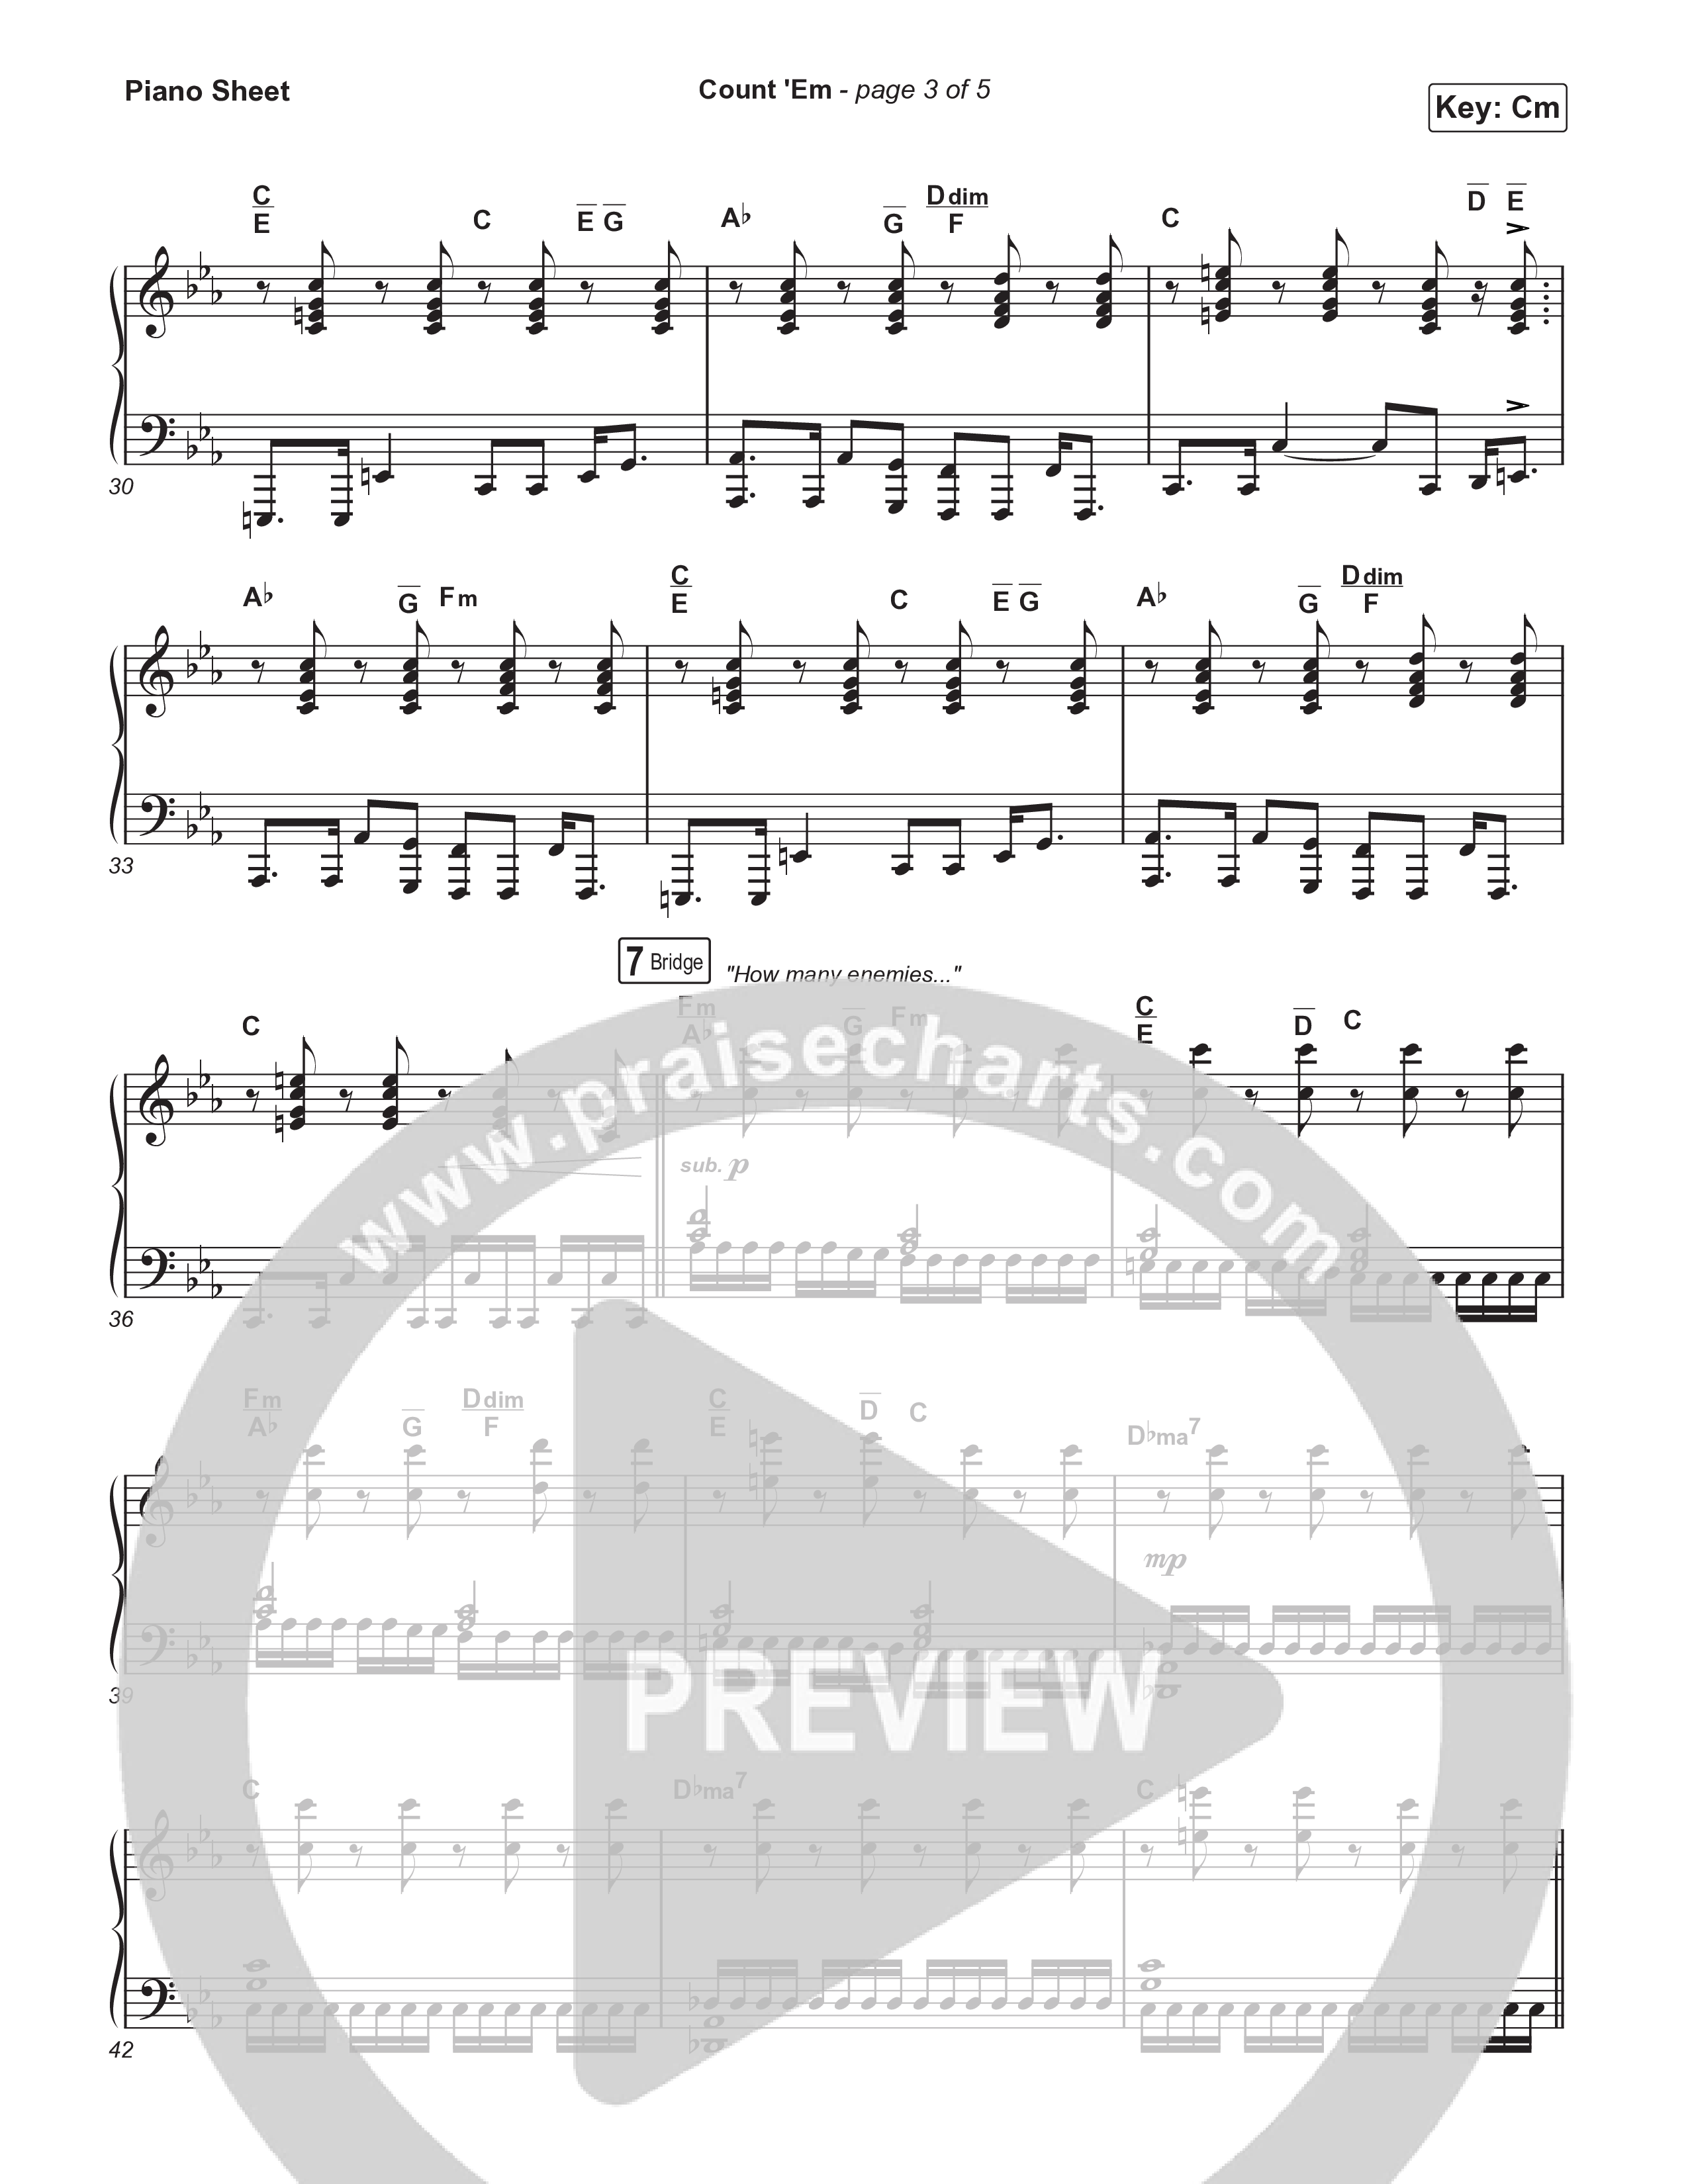 Count 'Em Piano Sheet (Brandon Lake)